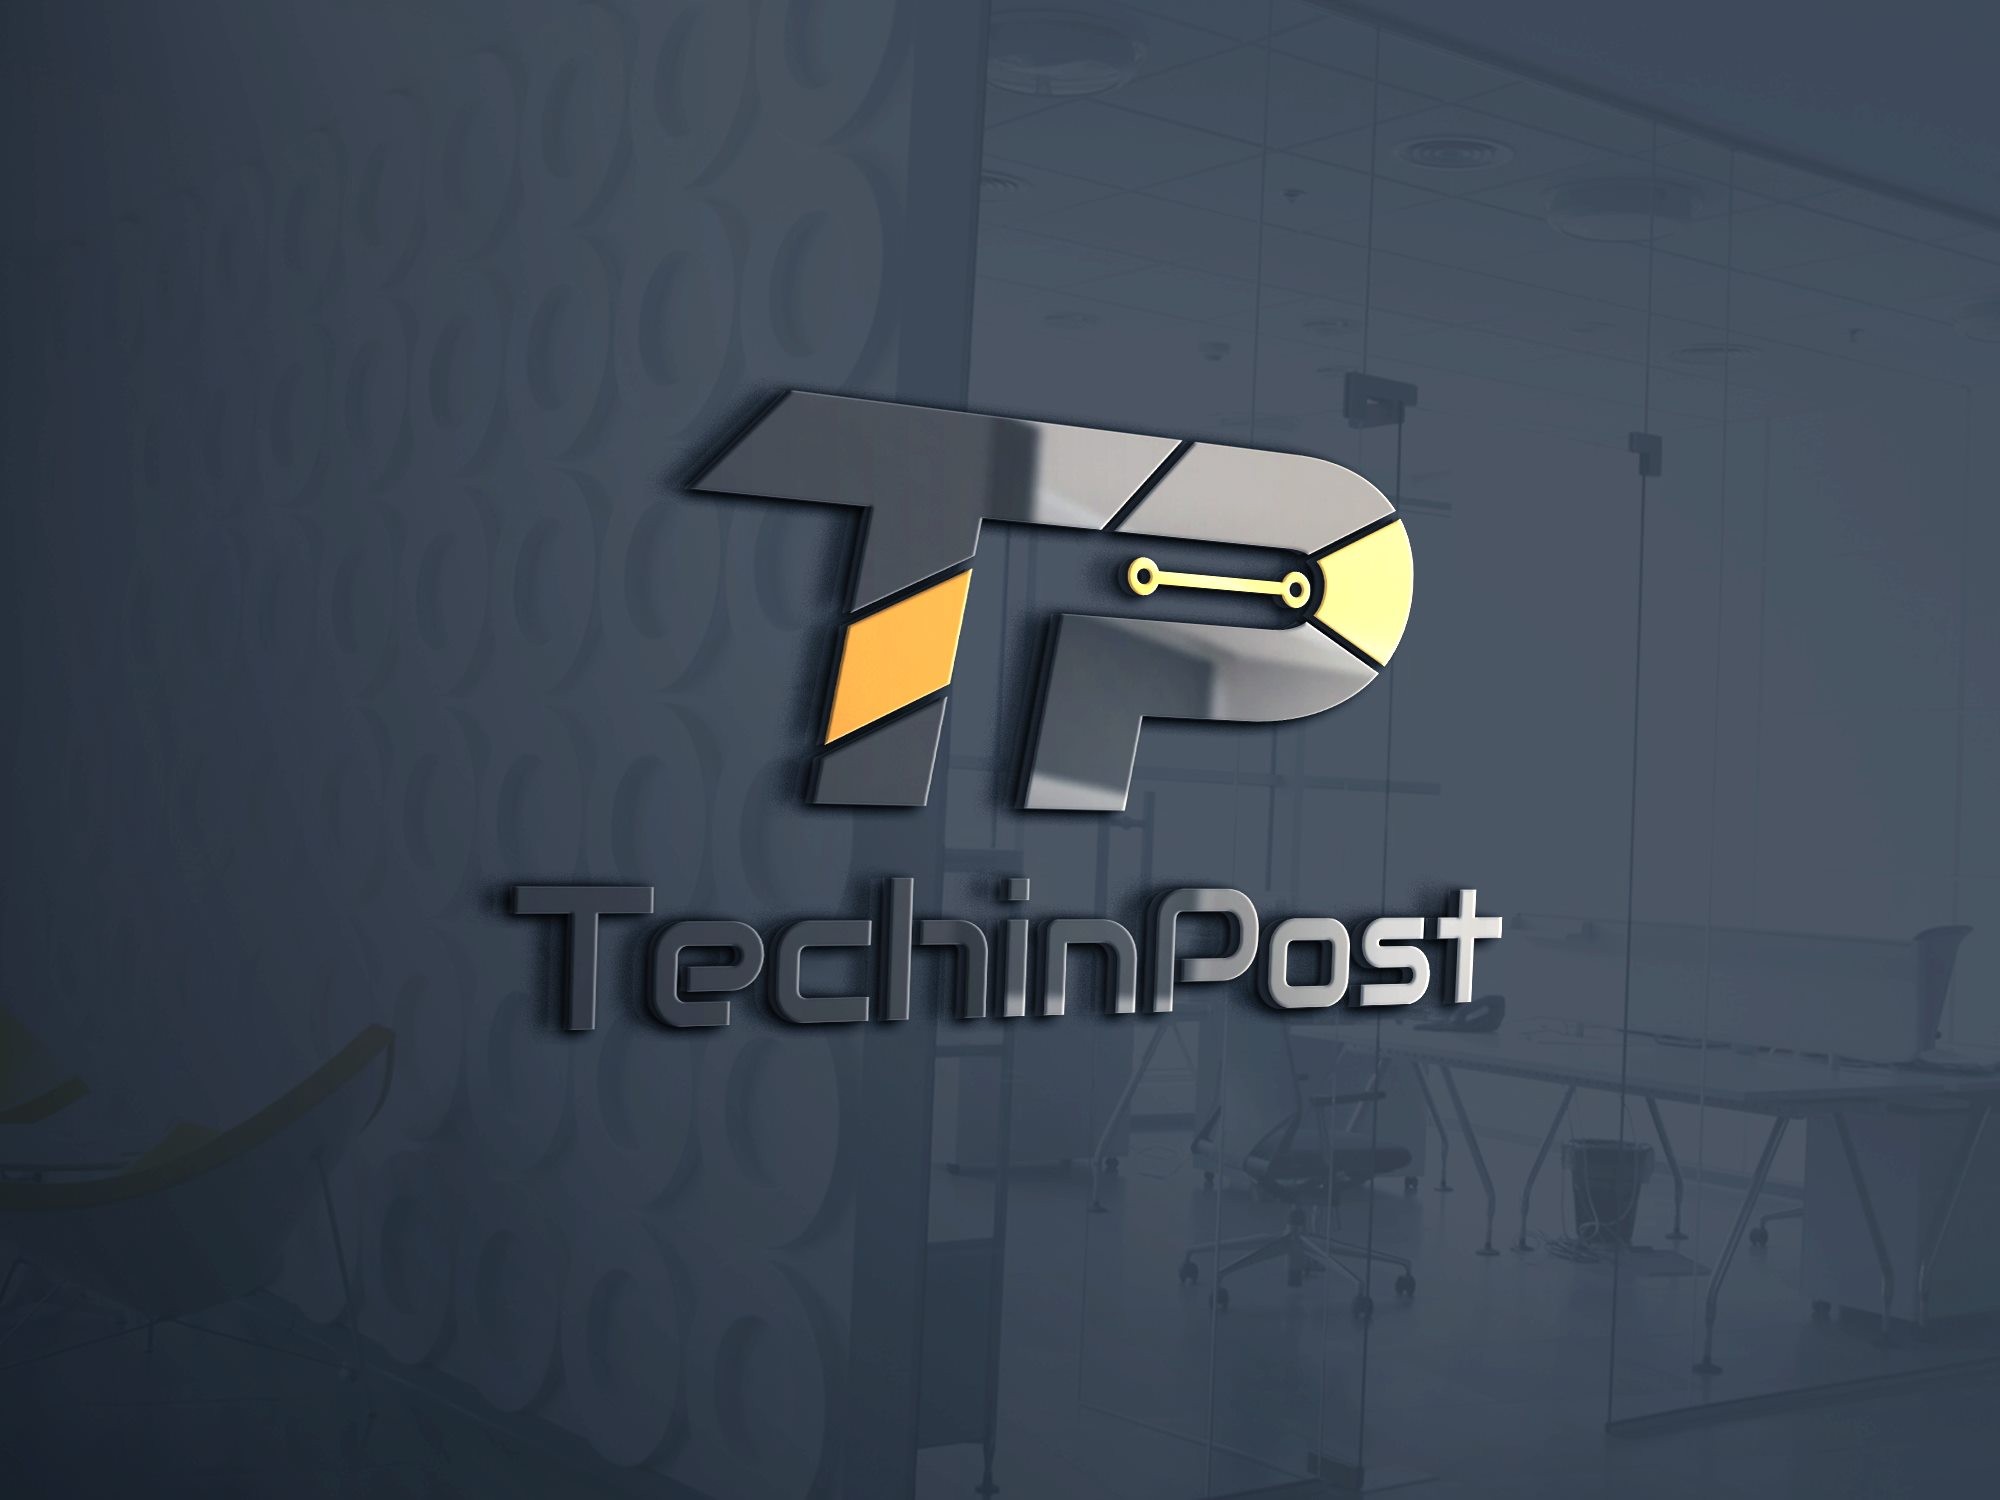 Techin Post